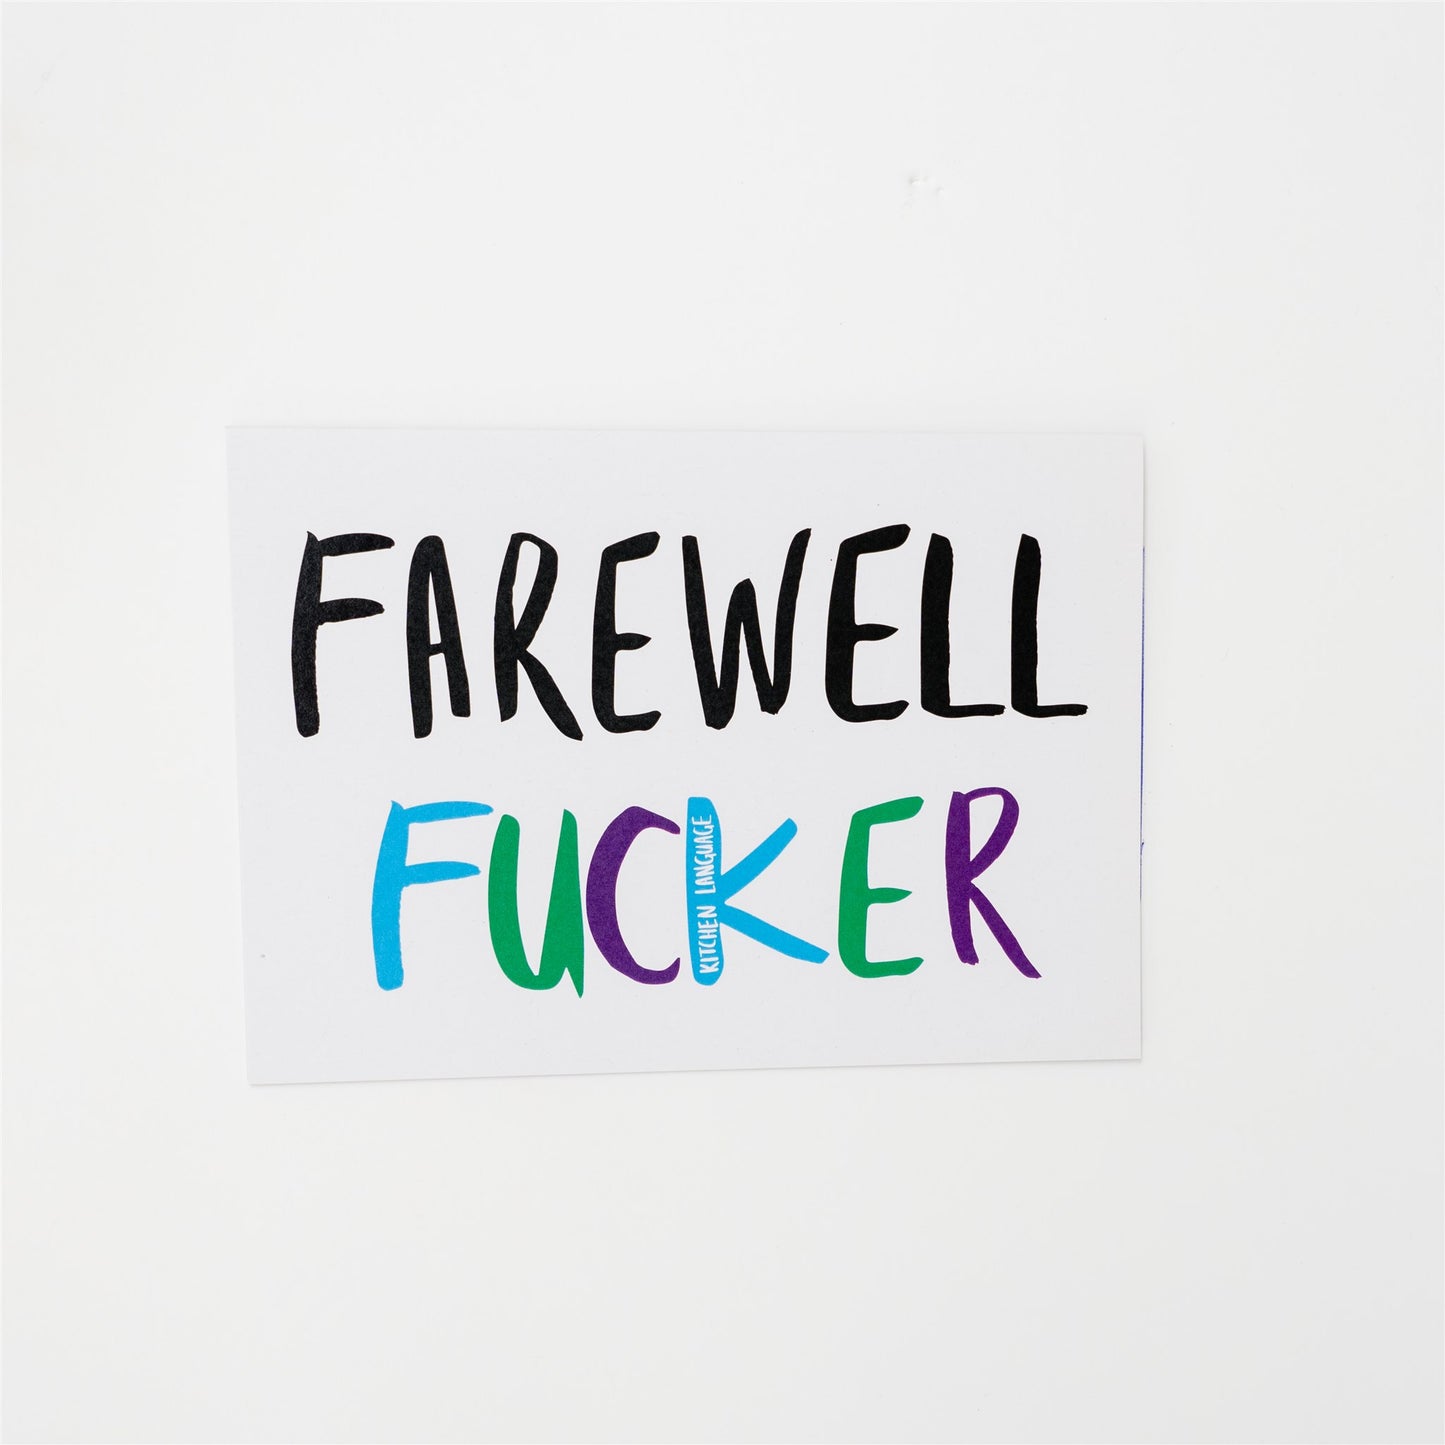 Farewell Fucker- greeting card- kitchen language